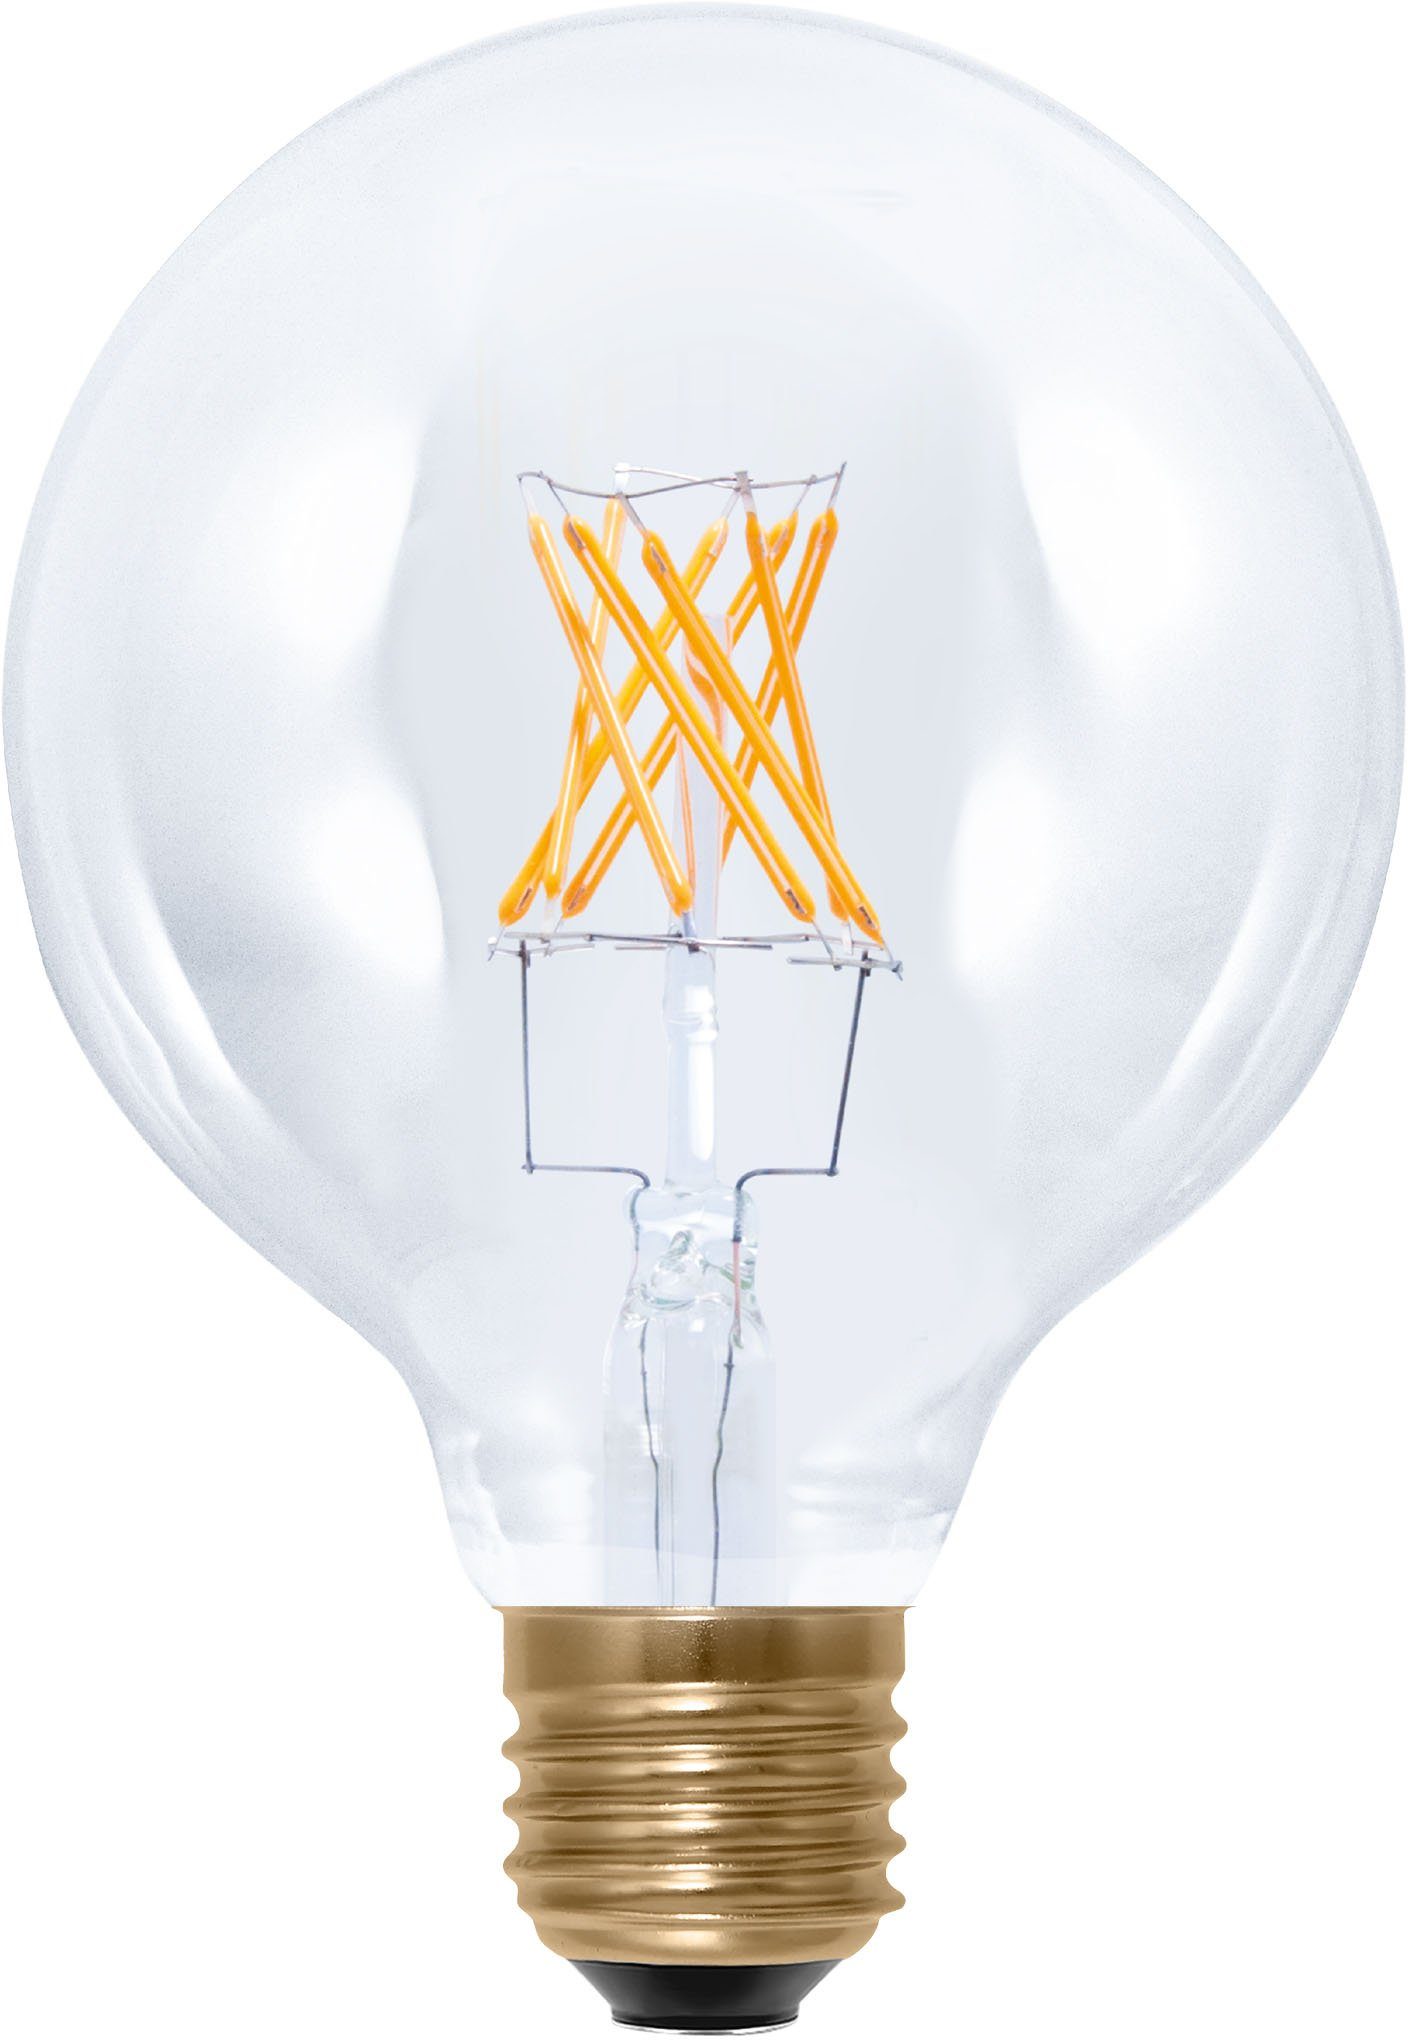 SEGULA LED-Leuchtmittel LED Globe 95 klar, E27, Warmweiß, dimmbar, E27, Globe 95, klar, 5Watt